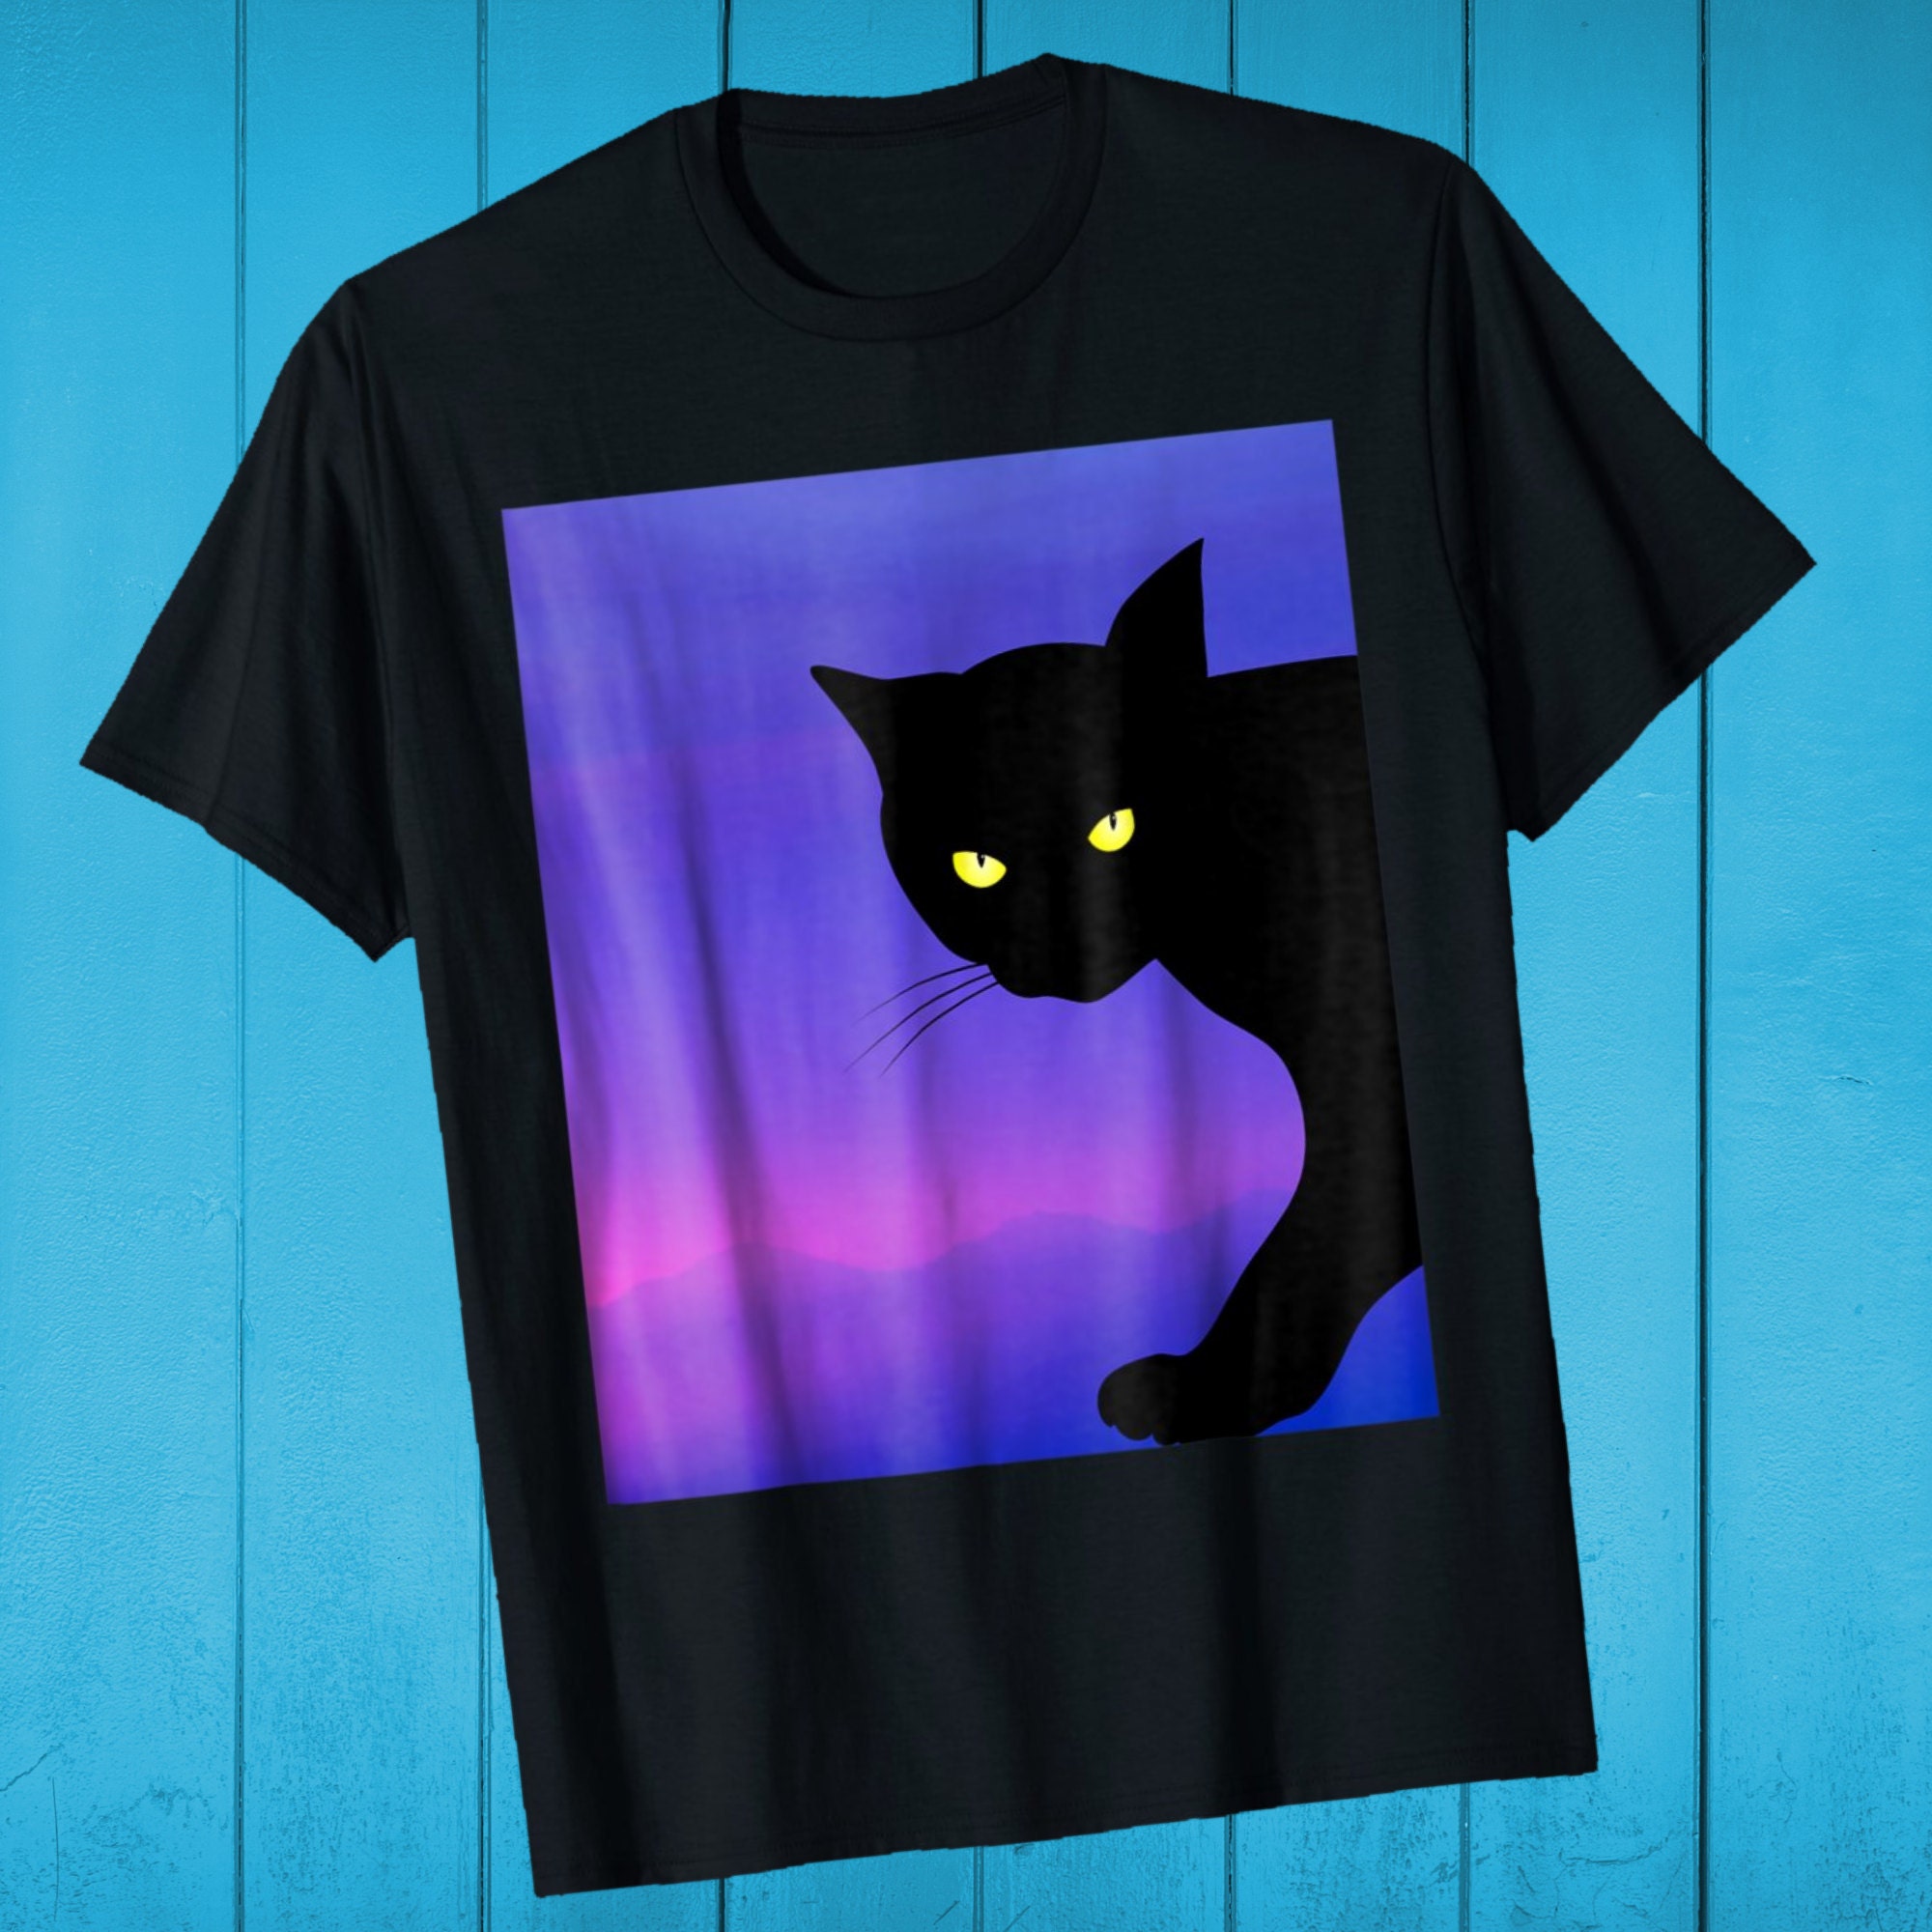 Funny black cat shirt